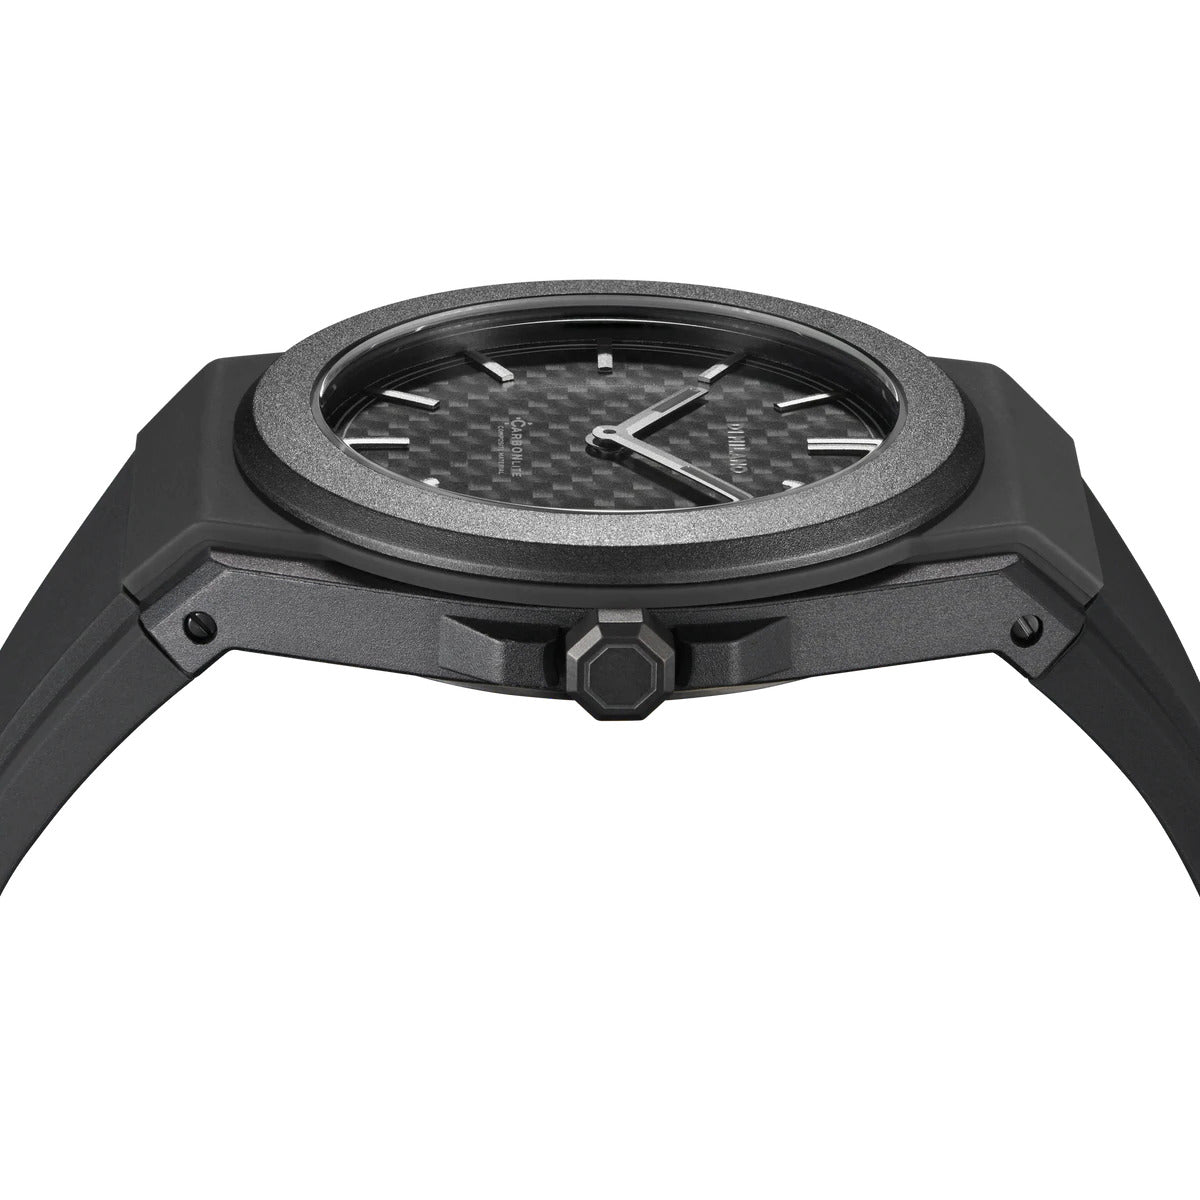 D1 Milano Men's Quartz Watch, Black Dial - ML-0253